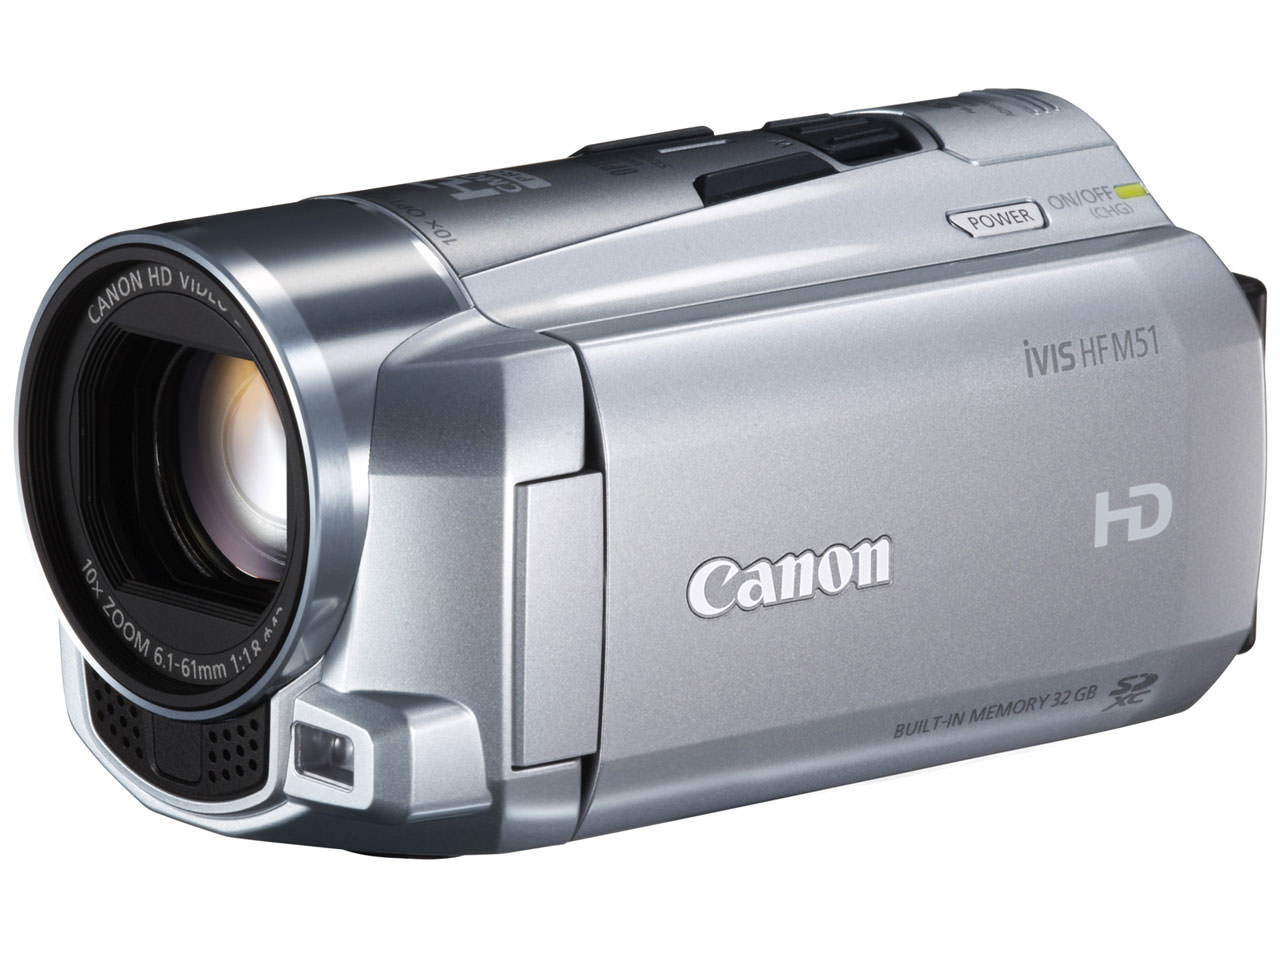 Canon iVIS HF M51